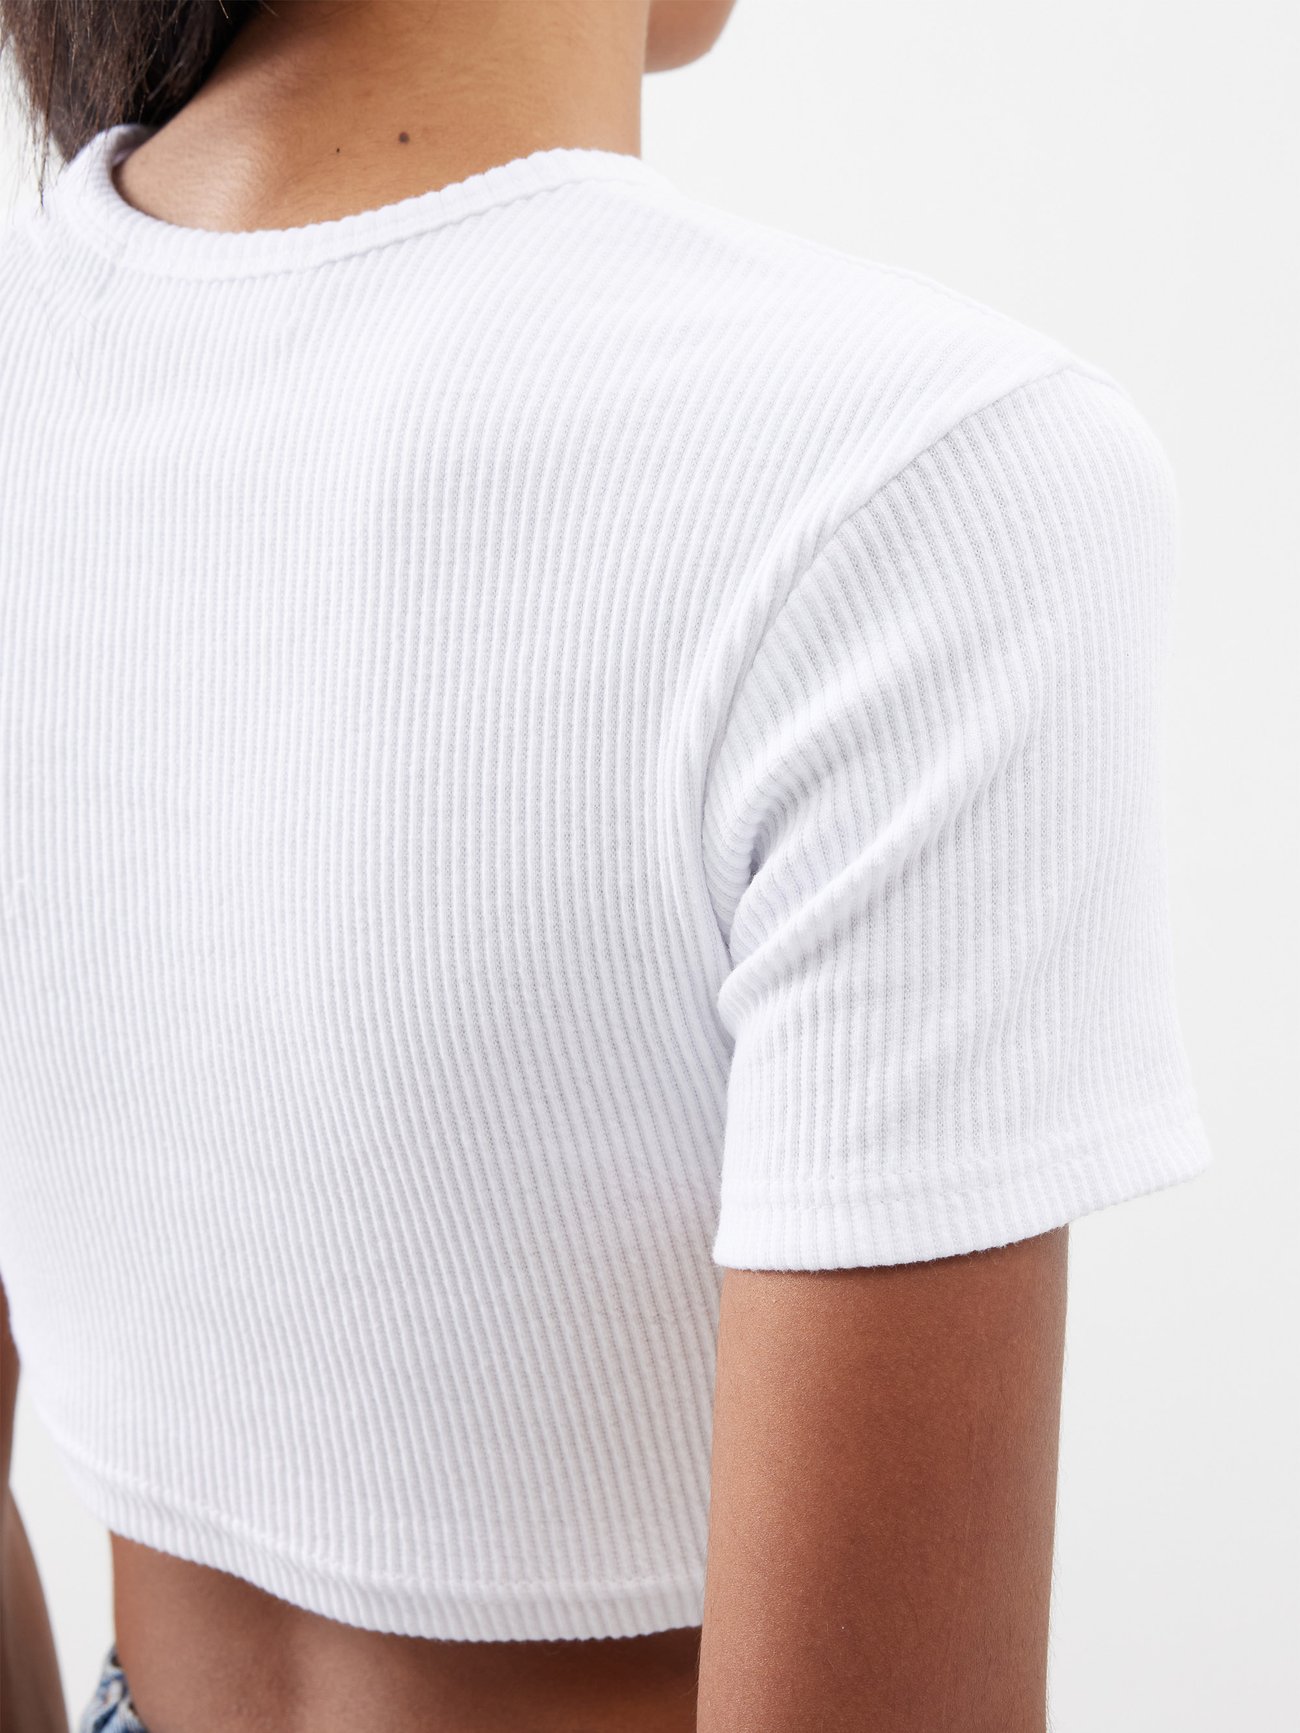 Camiseta Cropped Sportswear Ribbed Jersey Off White DV7870-133